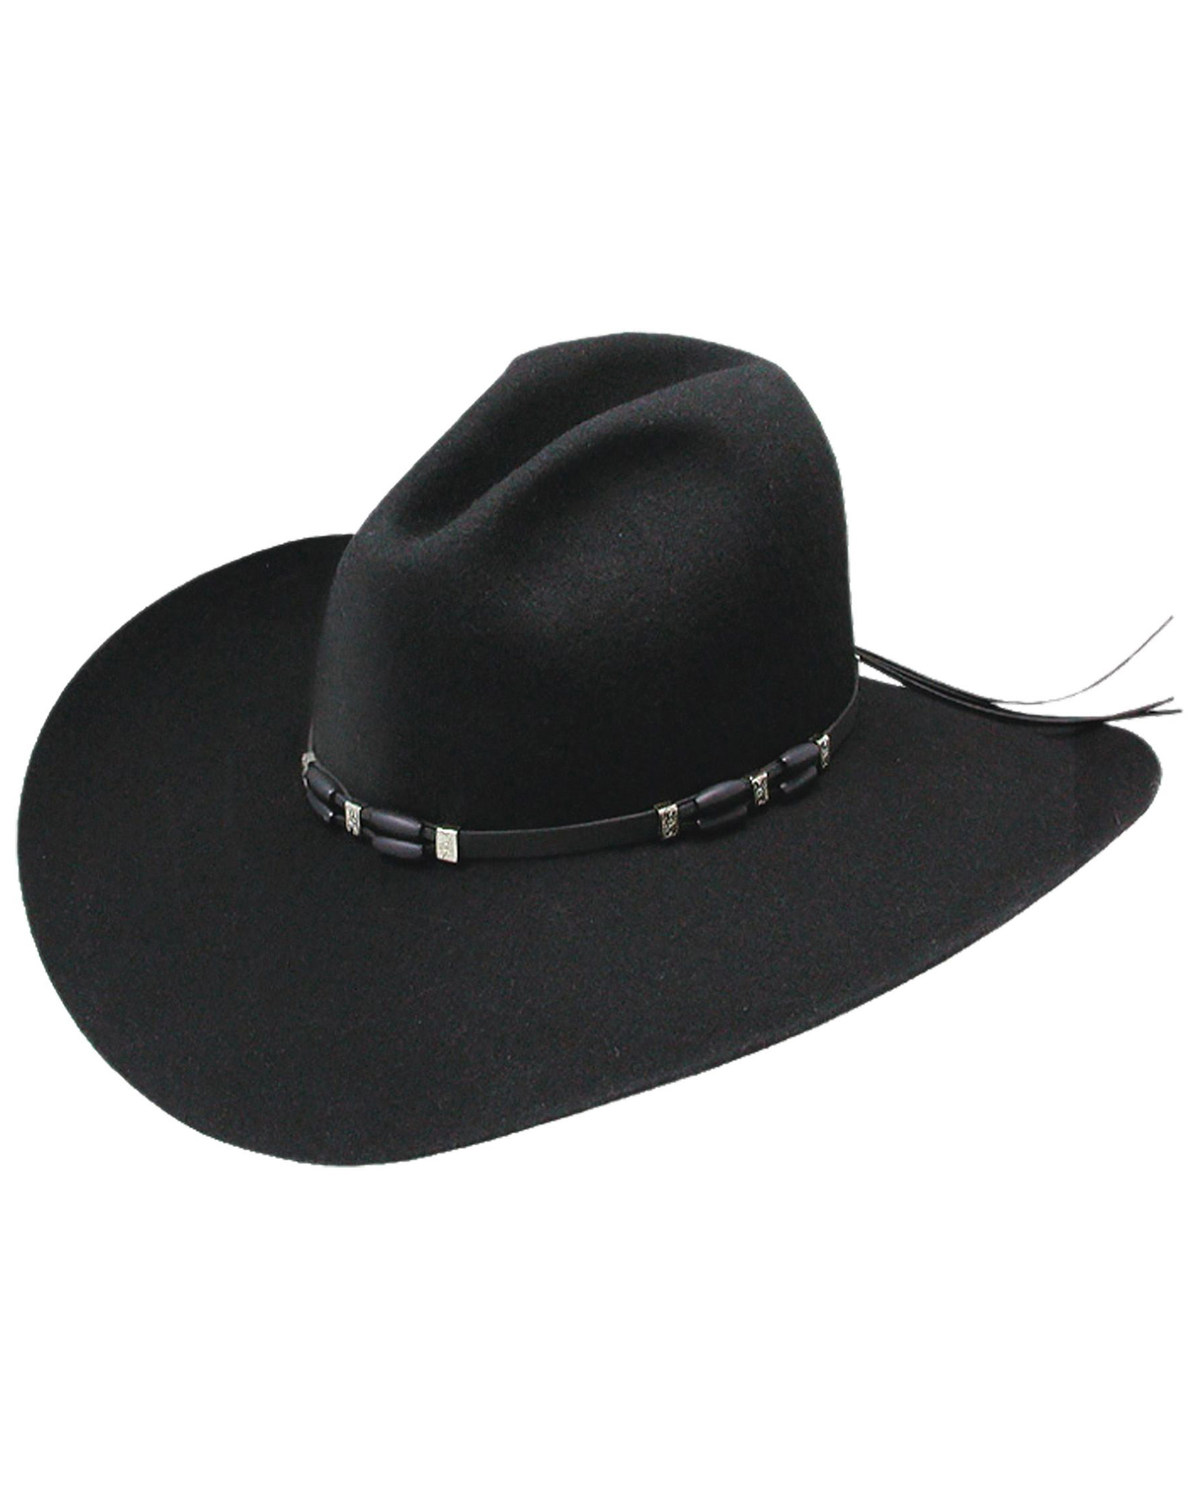 Stetson Broken Bow 4X Felt Cowboy Hat